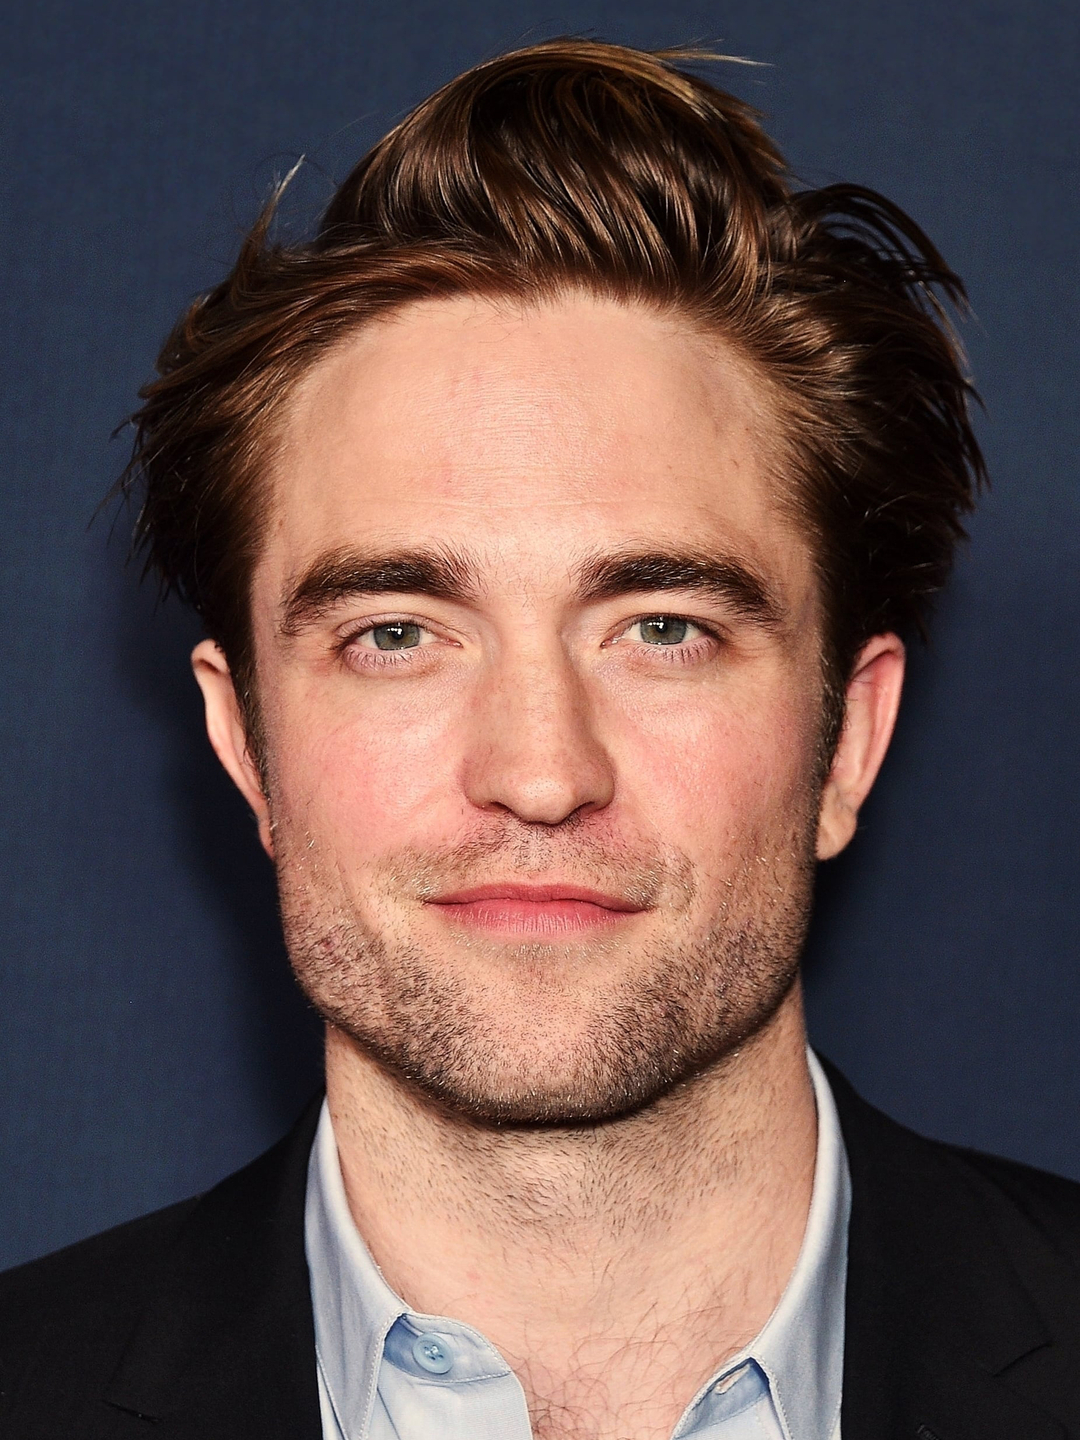 Robert Pattinson current look